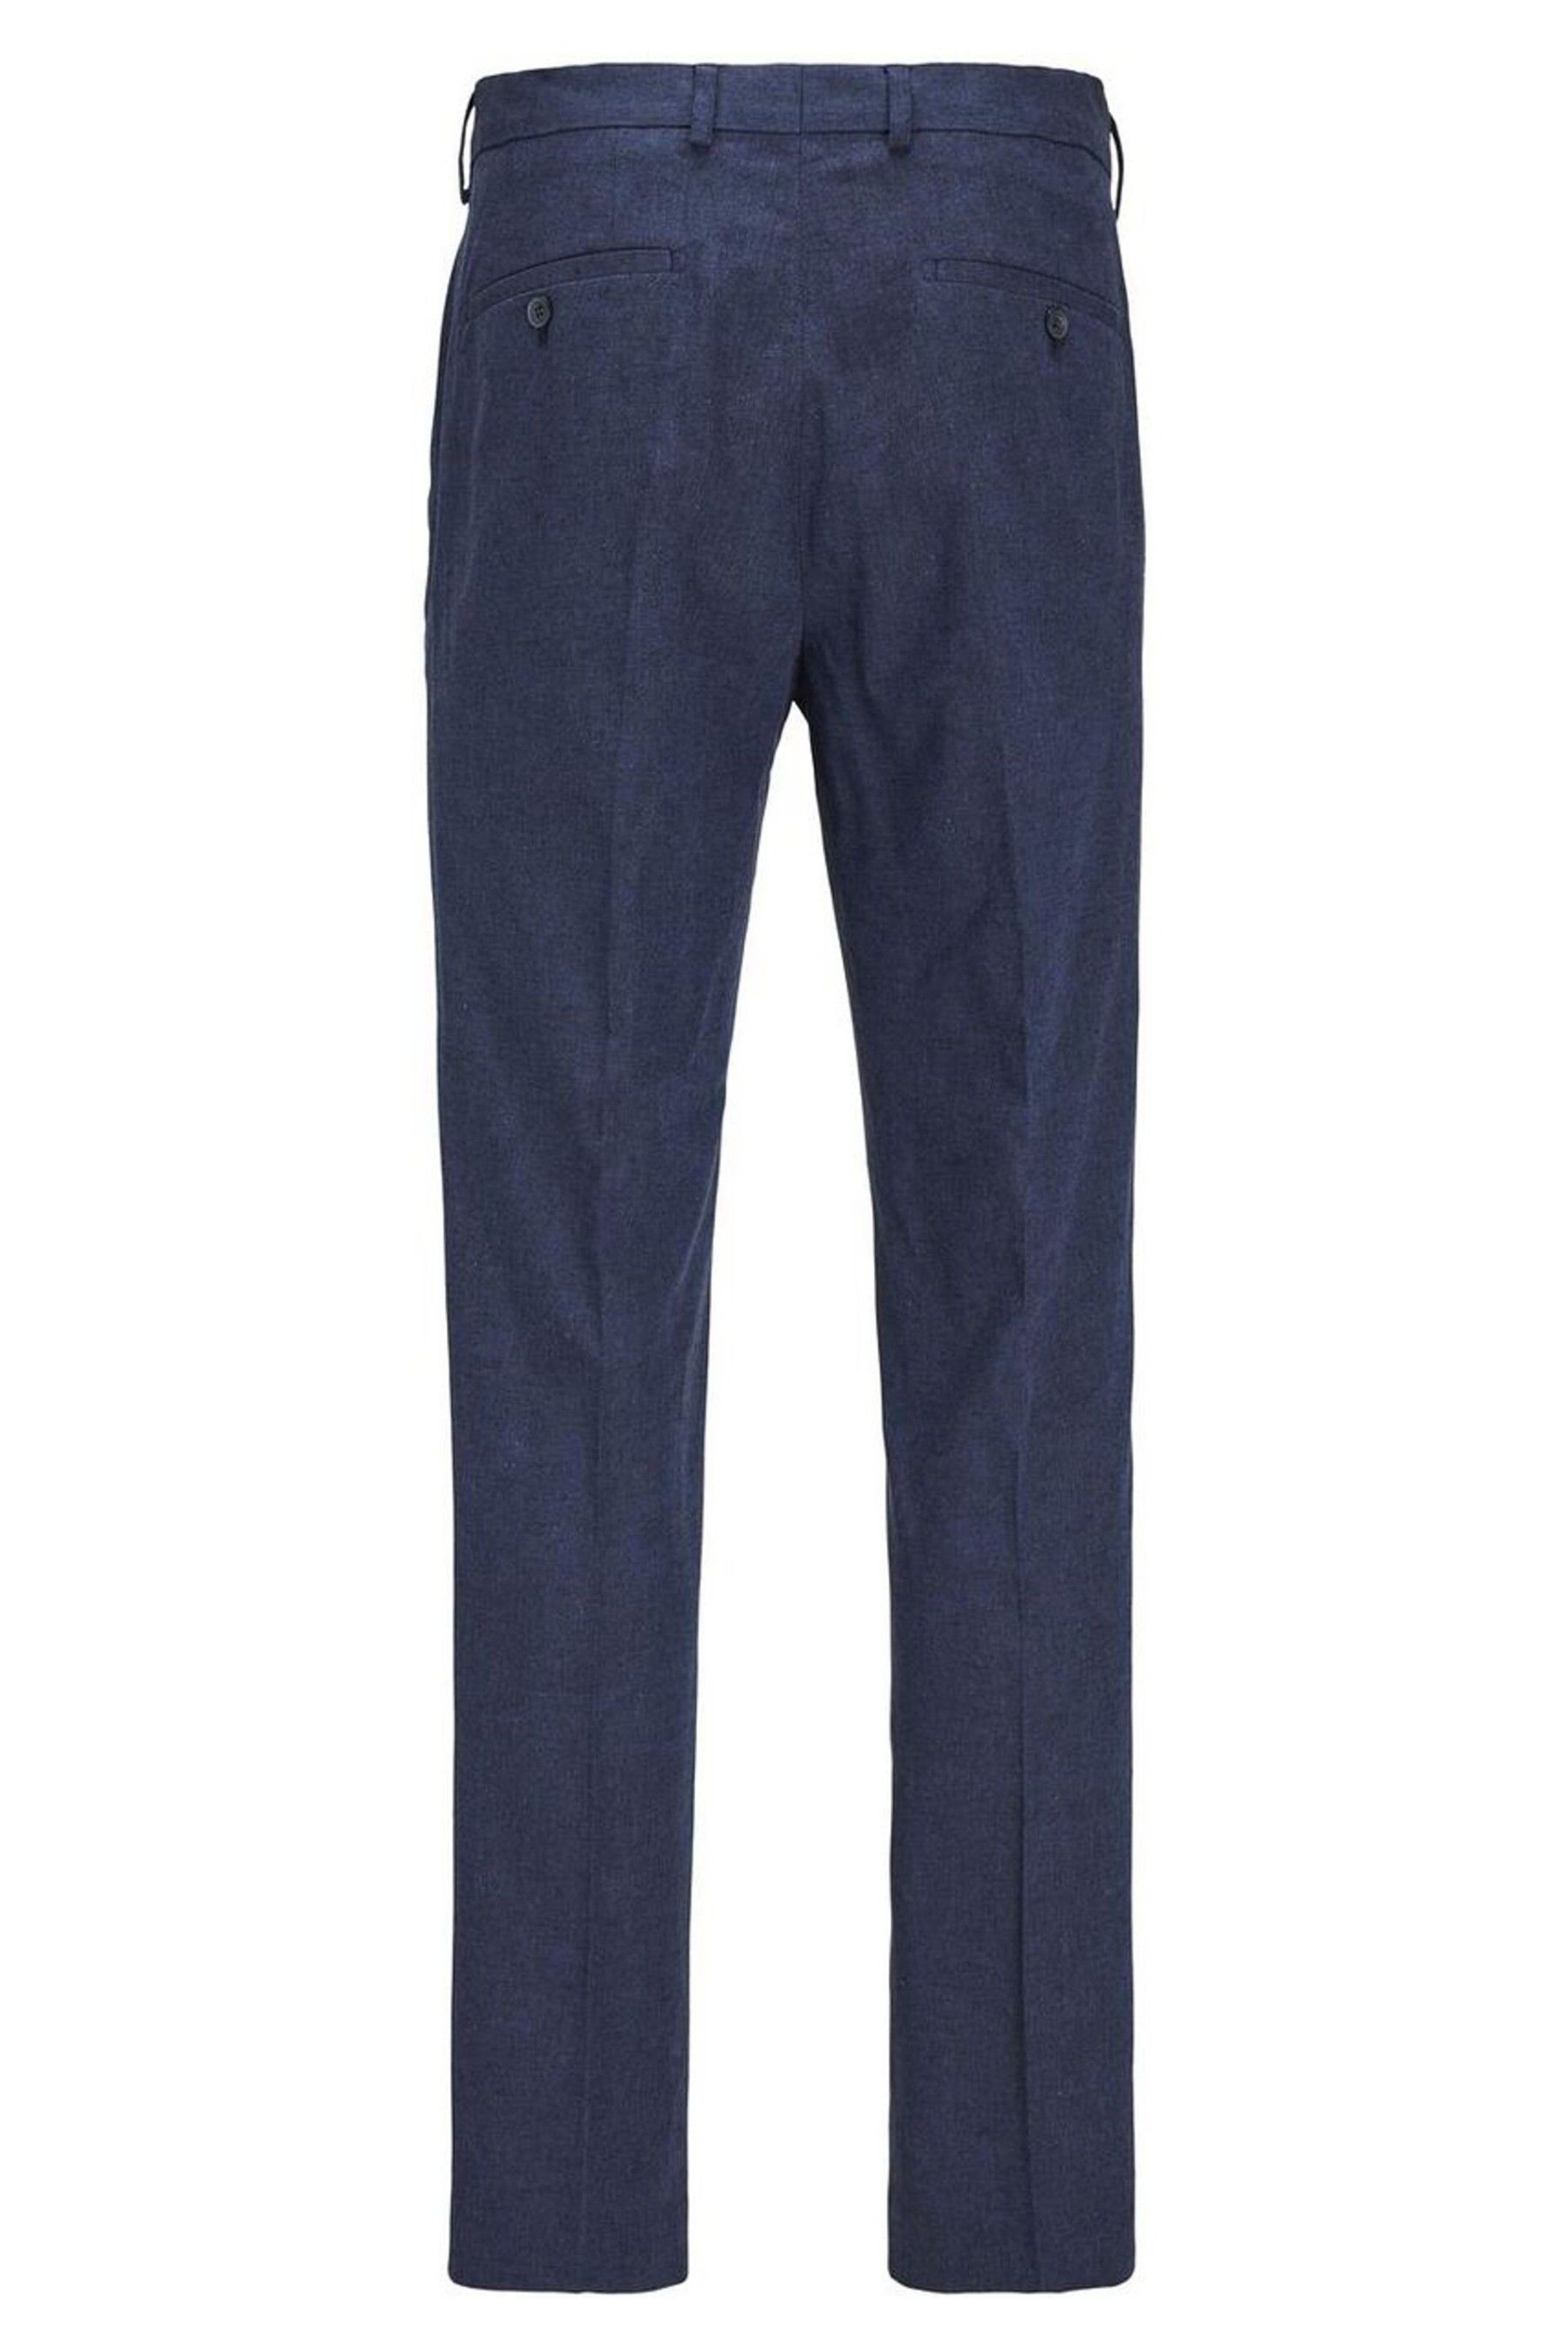 JACK & JONES Blue Linen Blend Slim Fit Trousers - Image 5 of 5